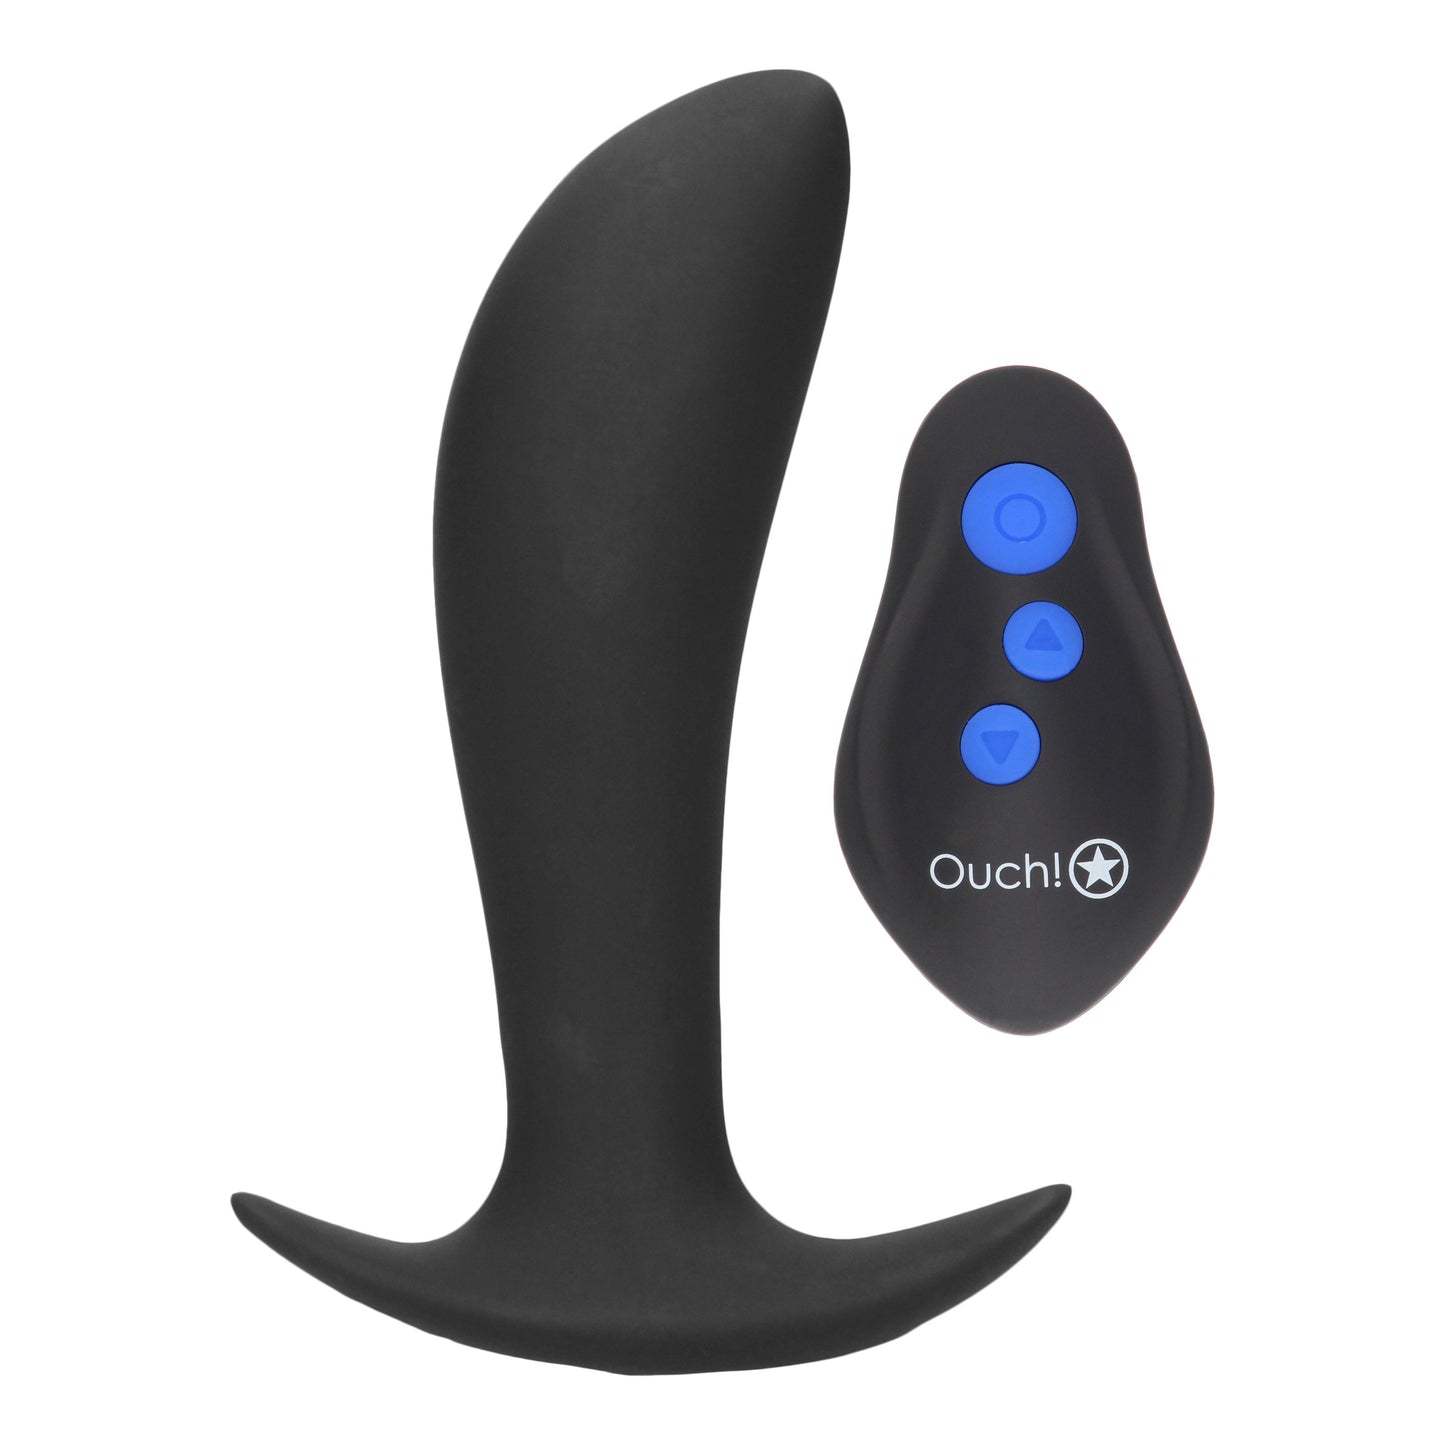 E-Stimulation and Vibration Butt Plug With Wireless Remote Control - Black OU-OU579BLK